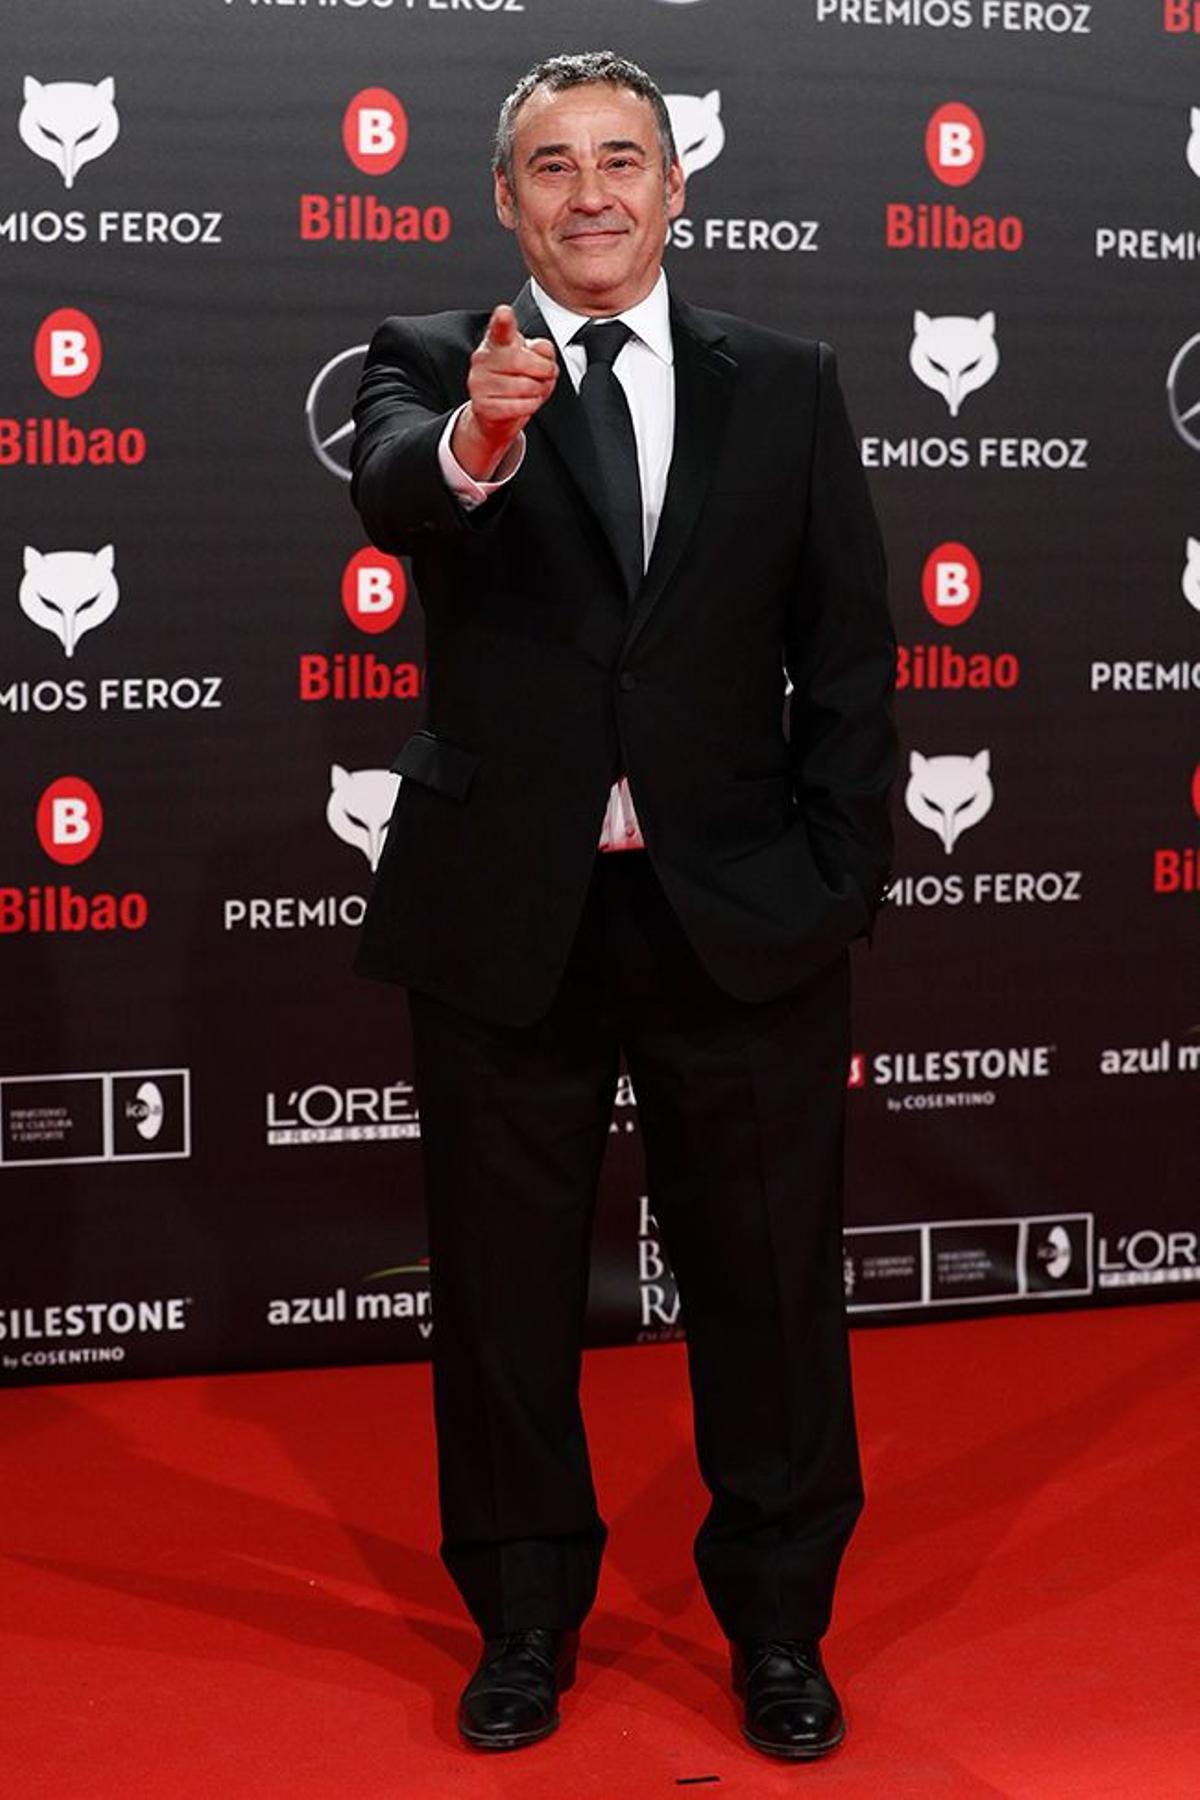 Premios Feroz 2019, Eduard Fernández